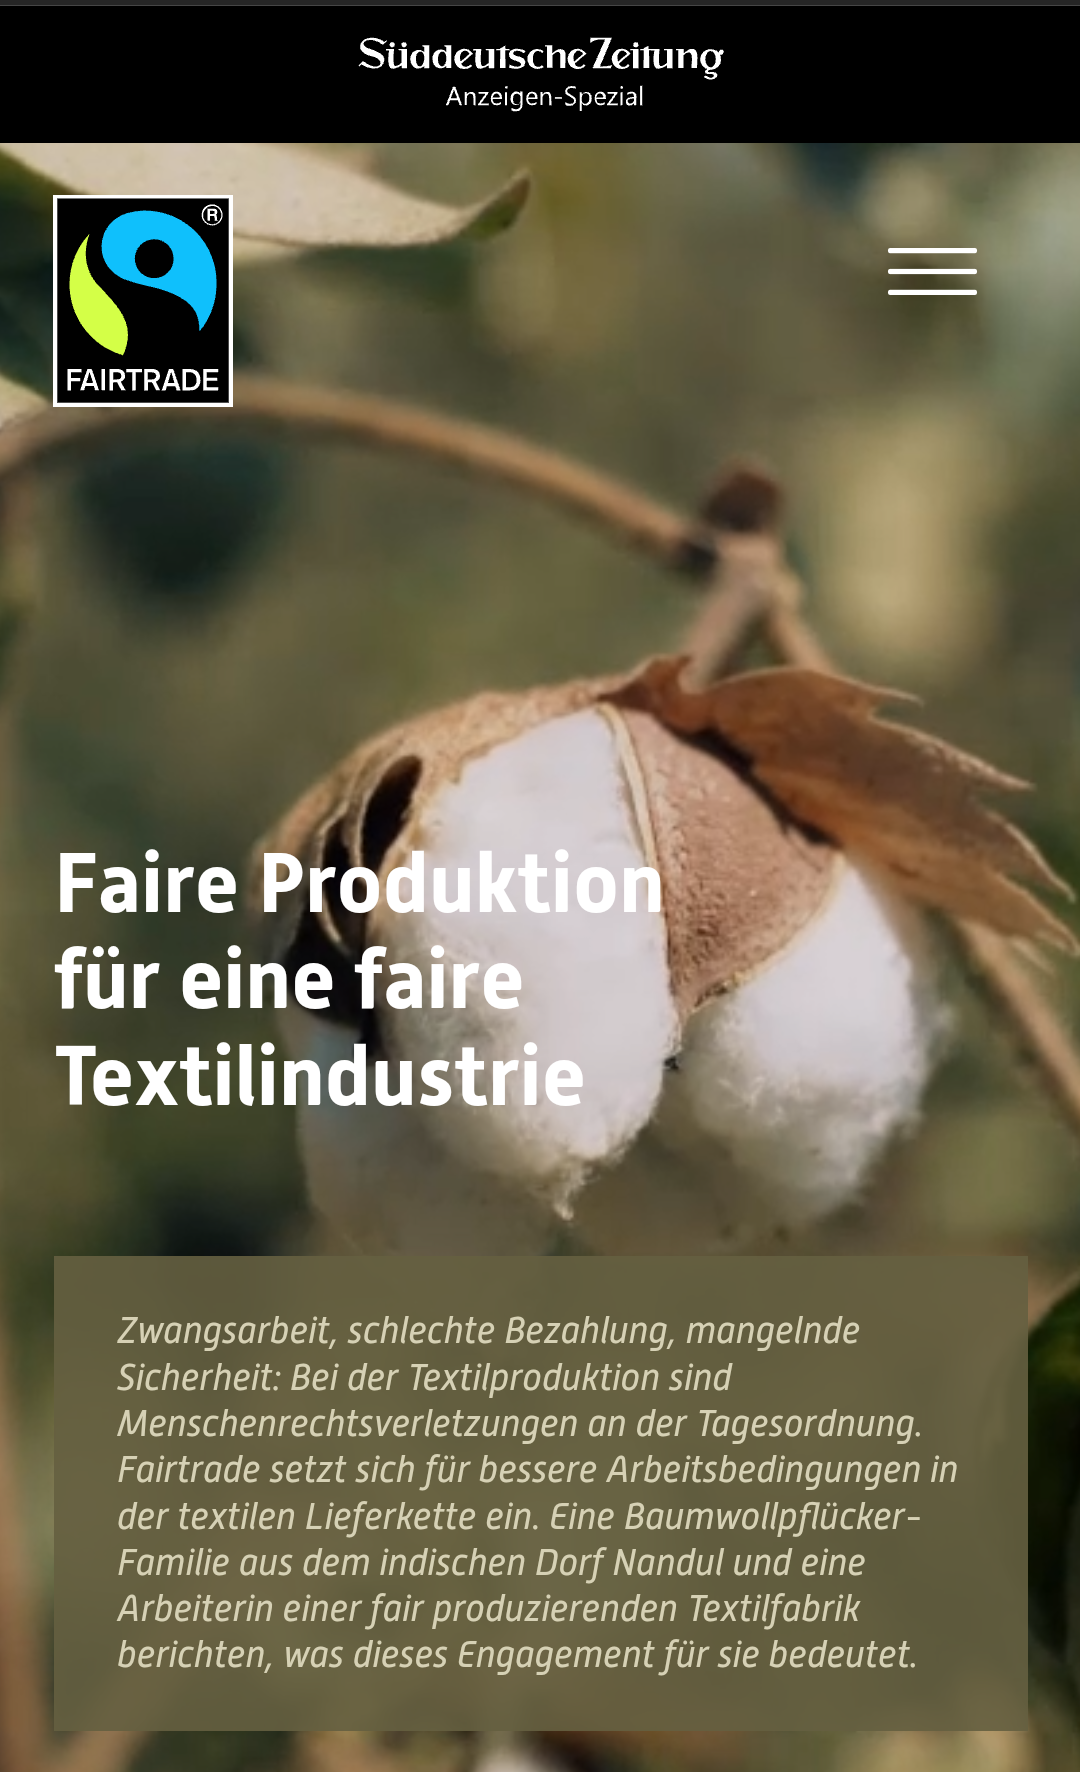 Süddeutsche Zeitung_Fair production for a fair textile industry (FAIRTRADE) - 